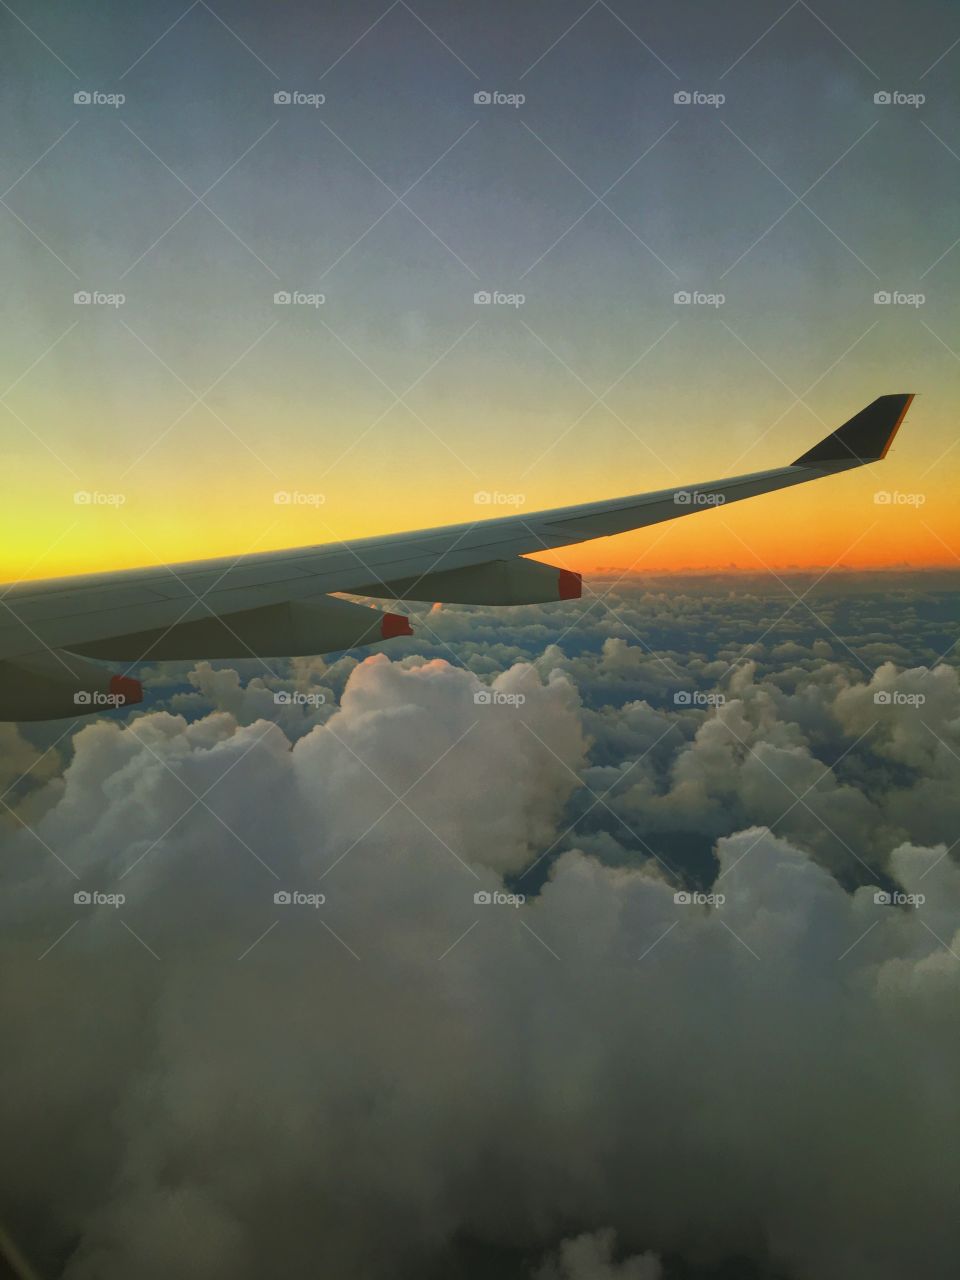 Plan flight home, beautiful sunset 